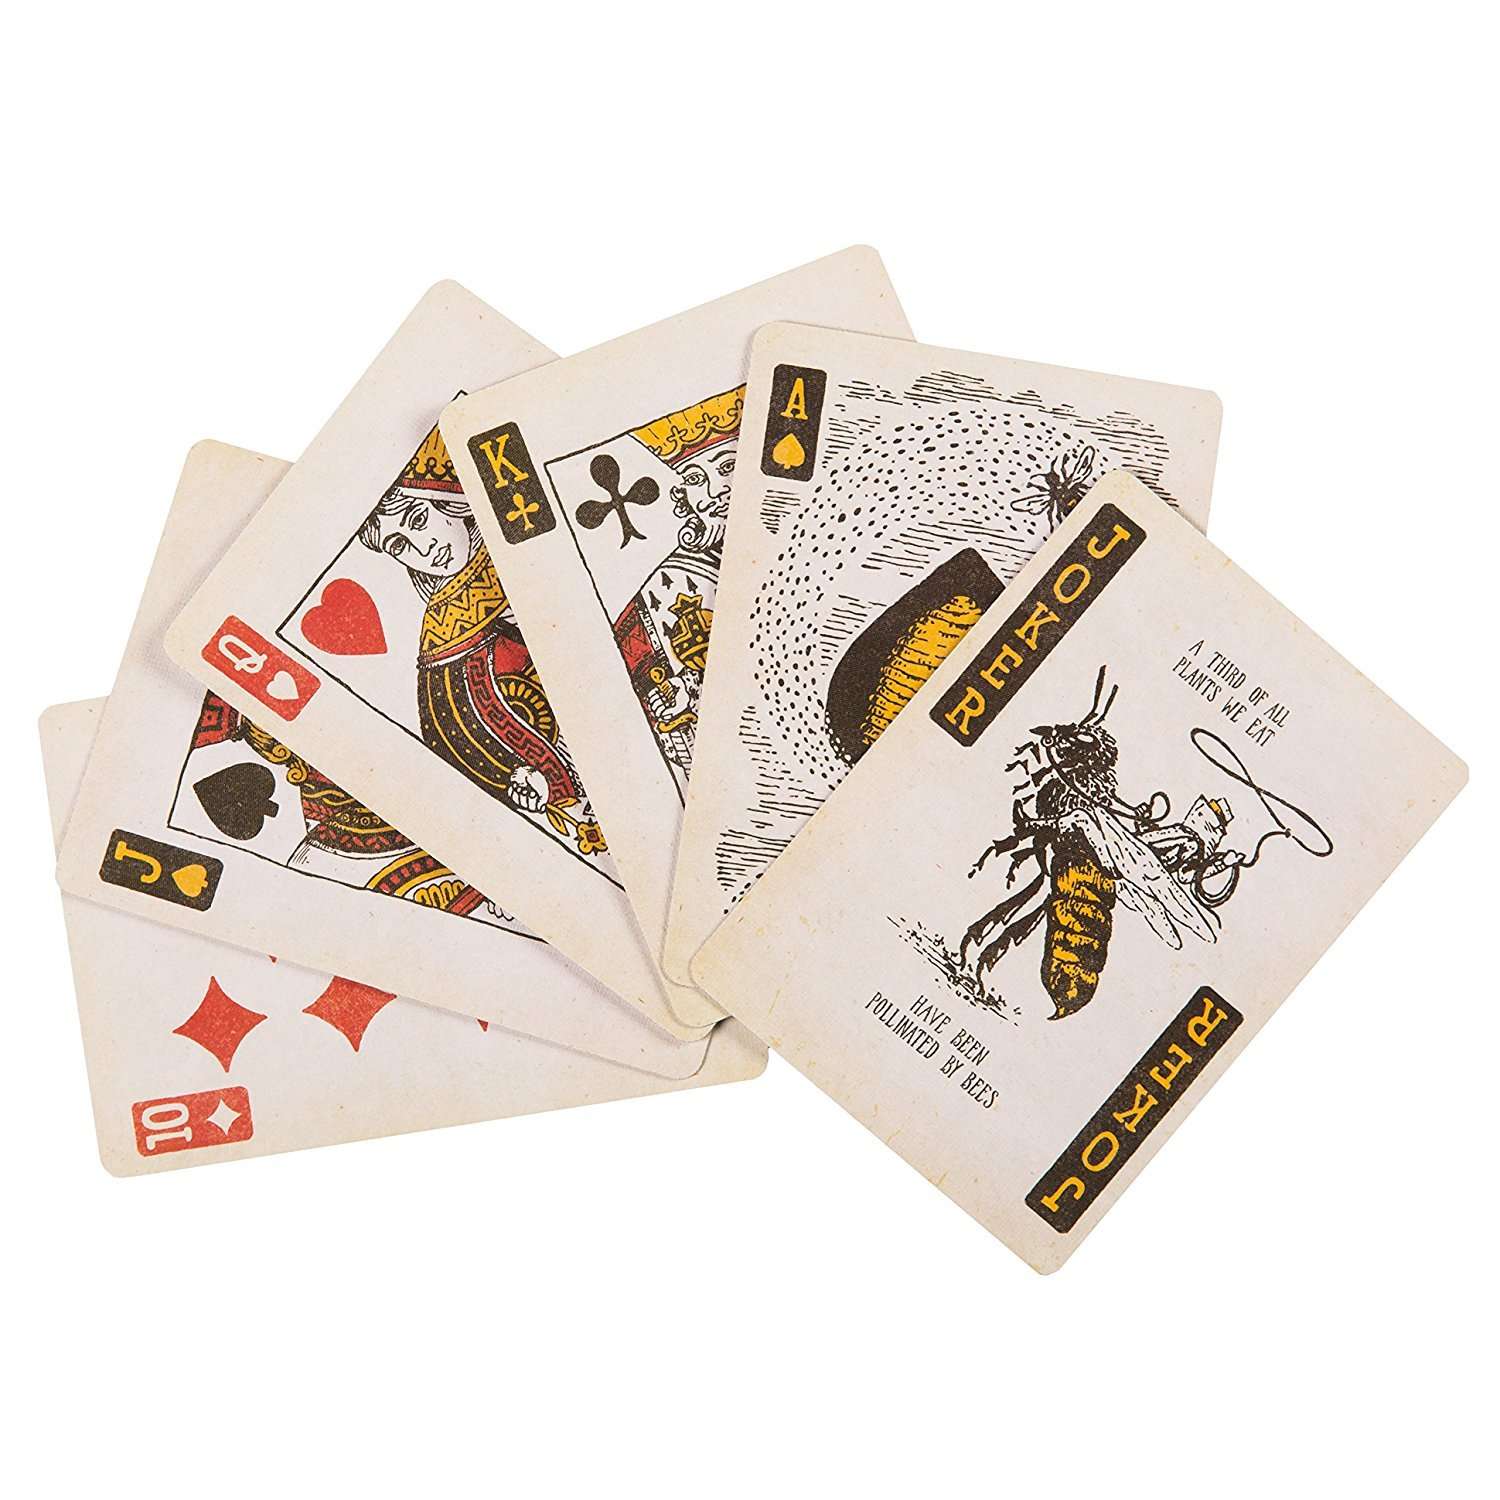 PlayingCardDecks.com-BumbleBee Playing Cards USPCC